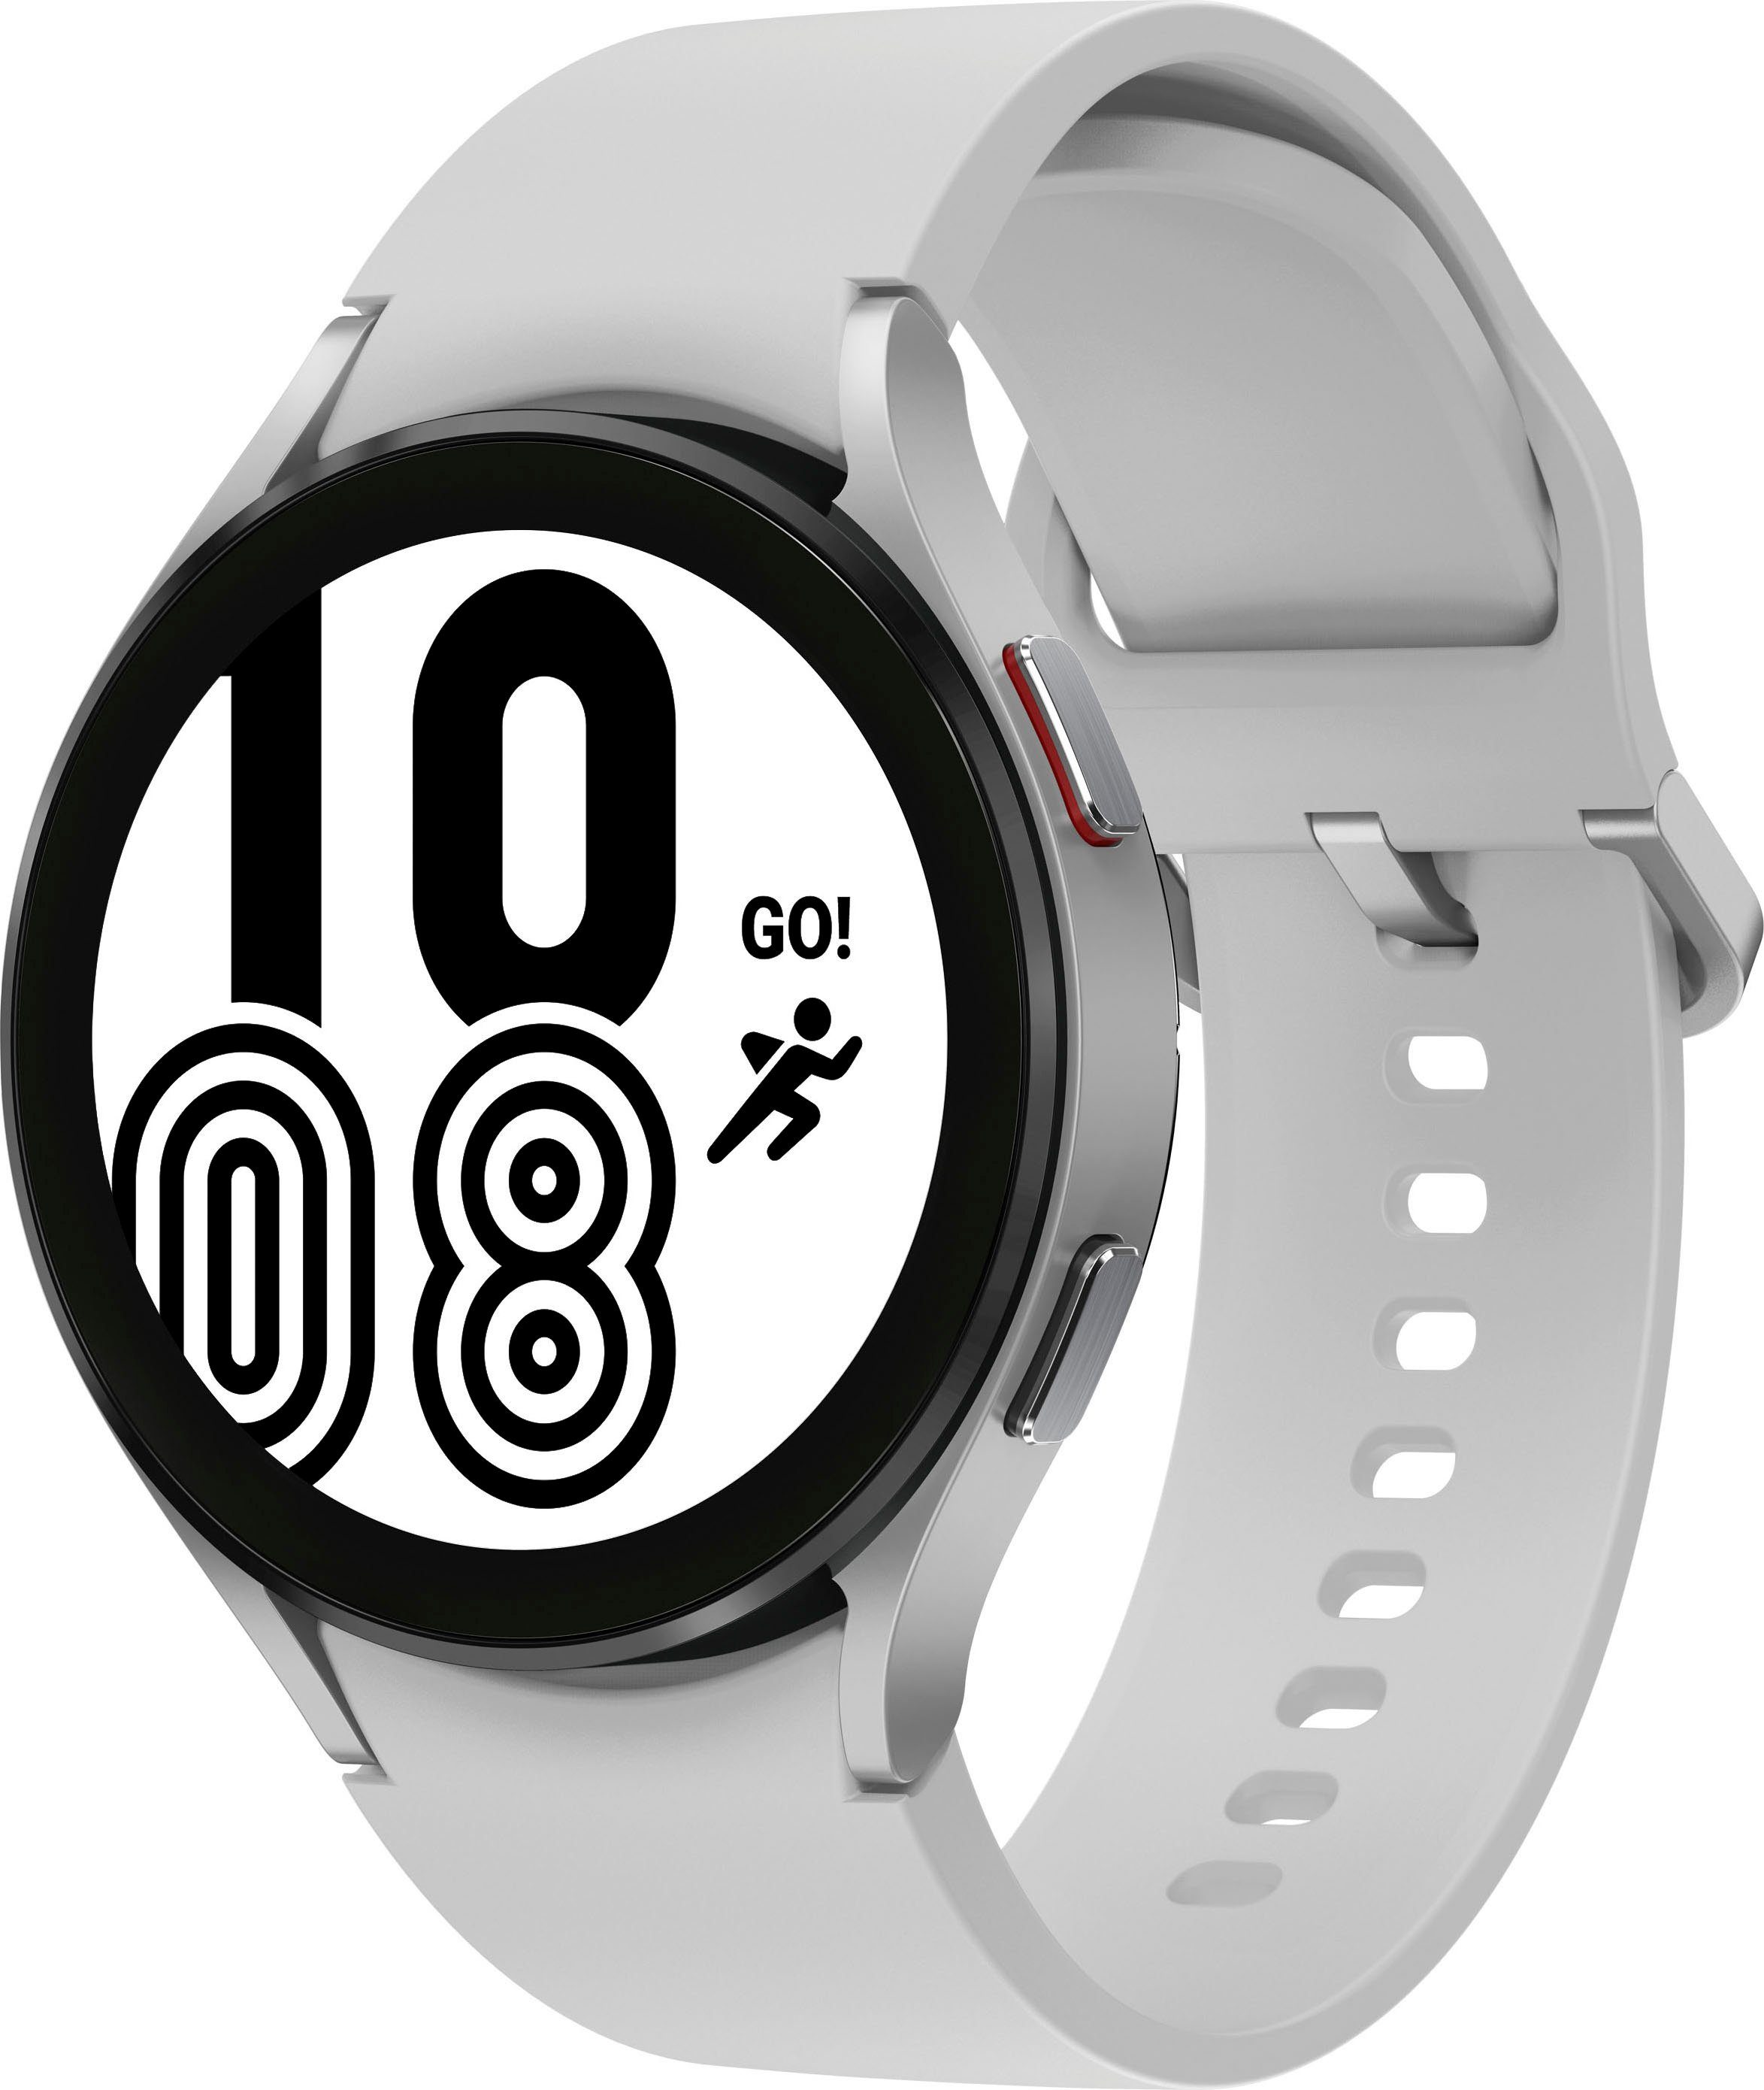 Samsung Galaxy Smartwatch OS Silber 4 Zoll, 44mm Fitness Tracker, | Wear (1,4 silber by LTE Uhr, Google), Fitness Gesundheitsfunktionen Watch